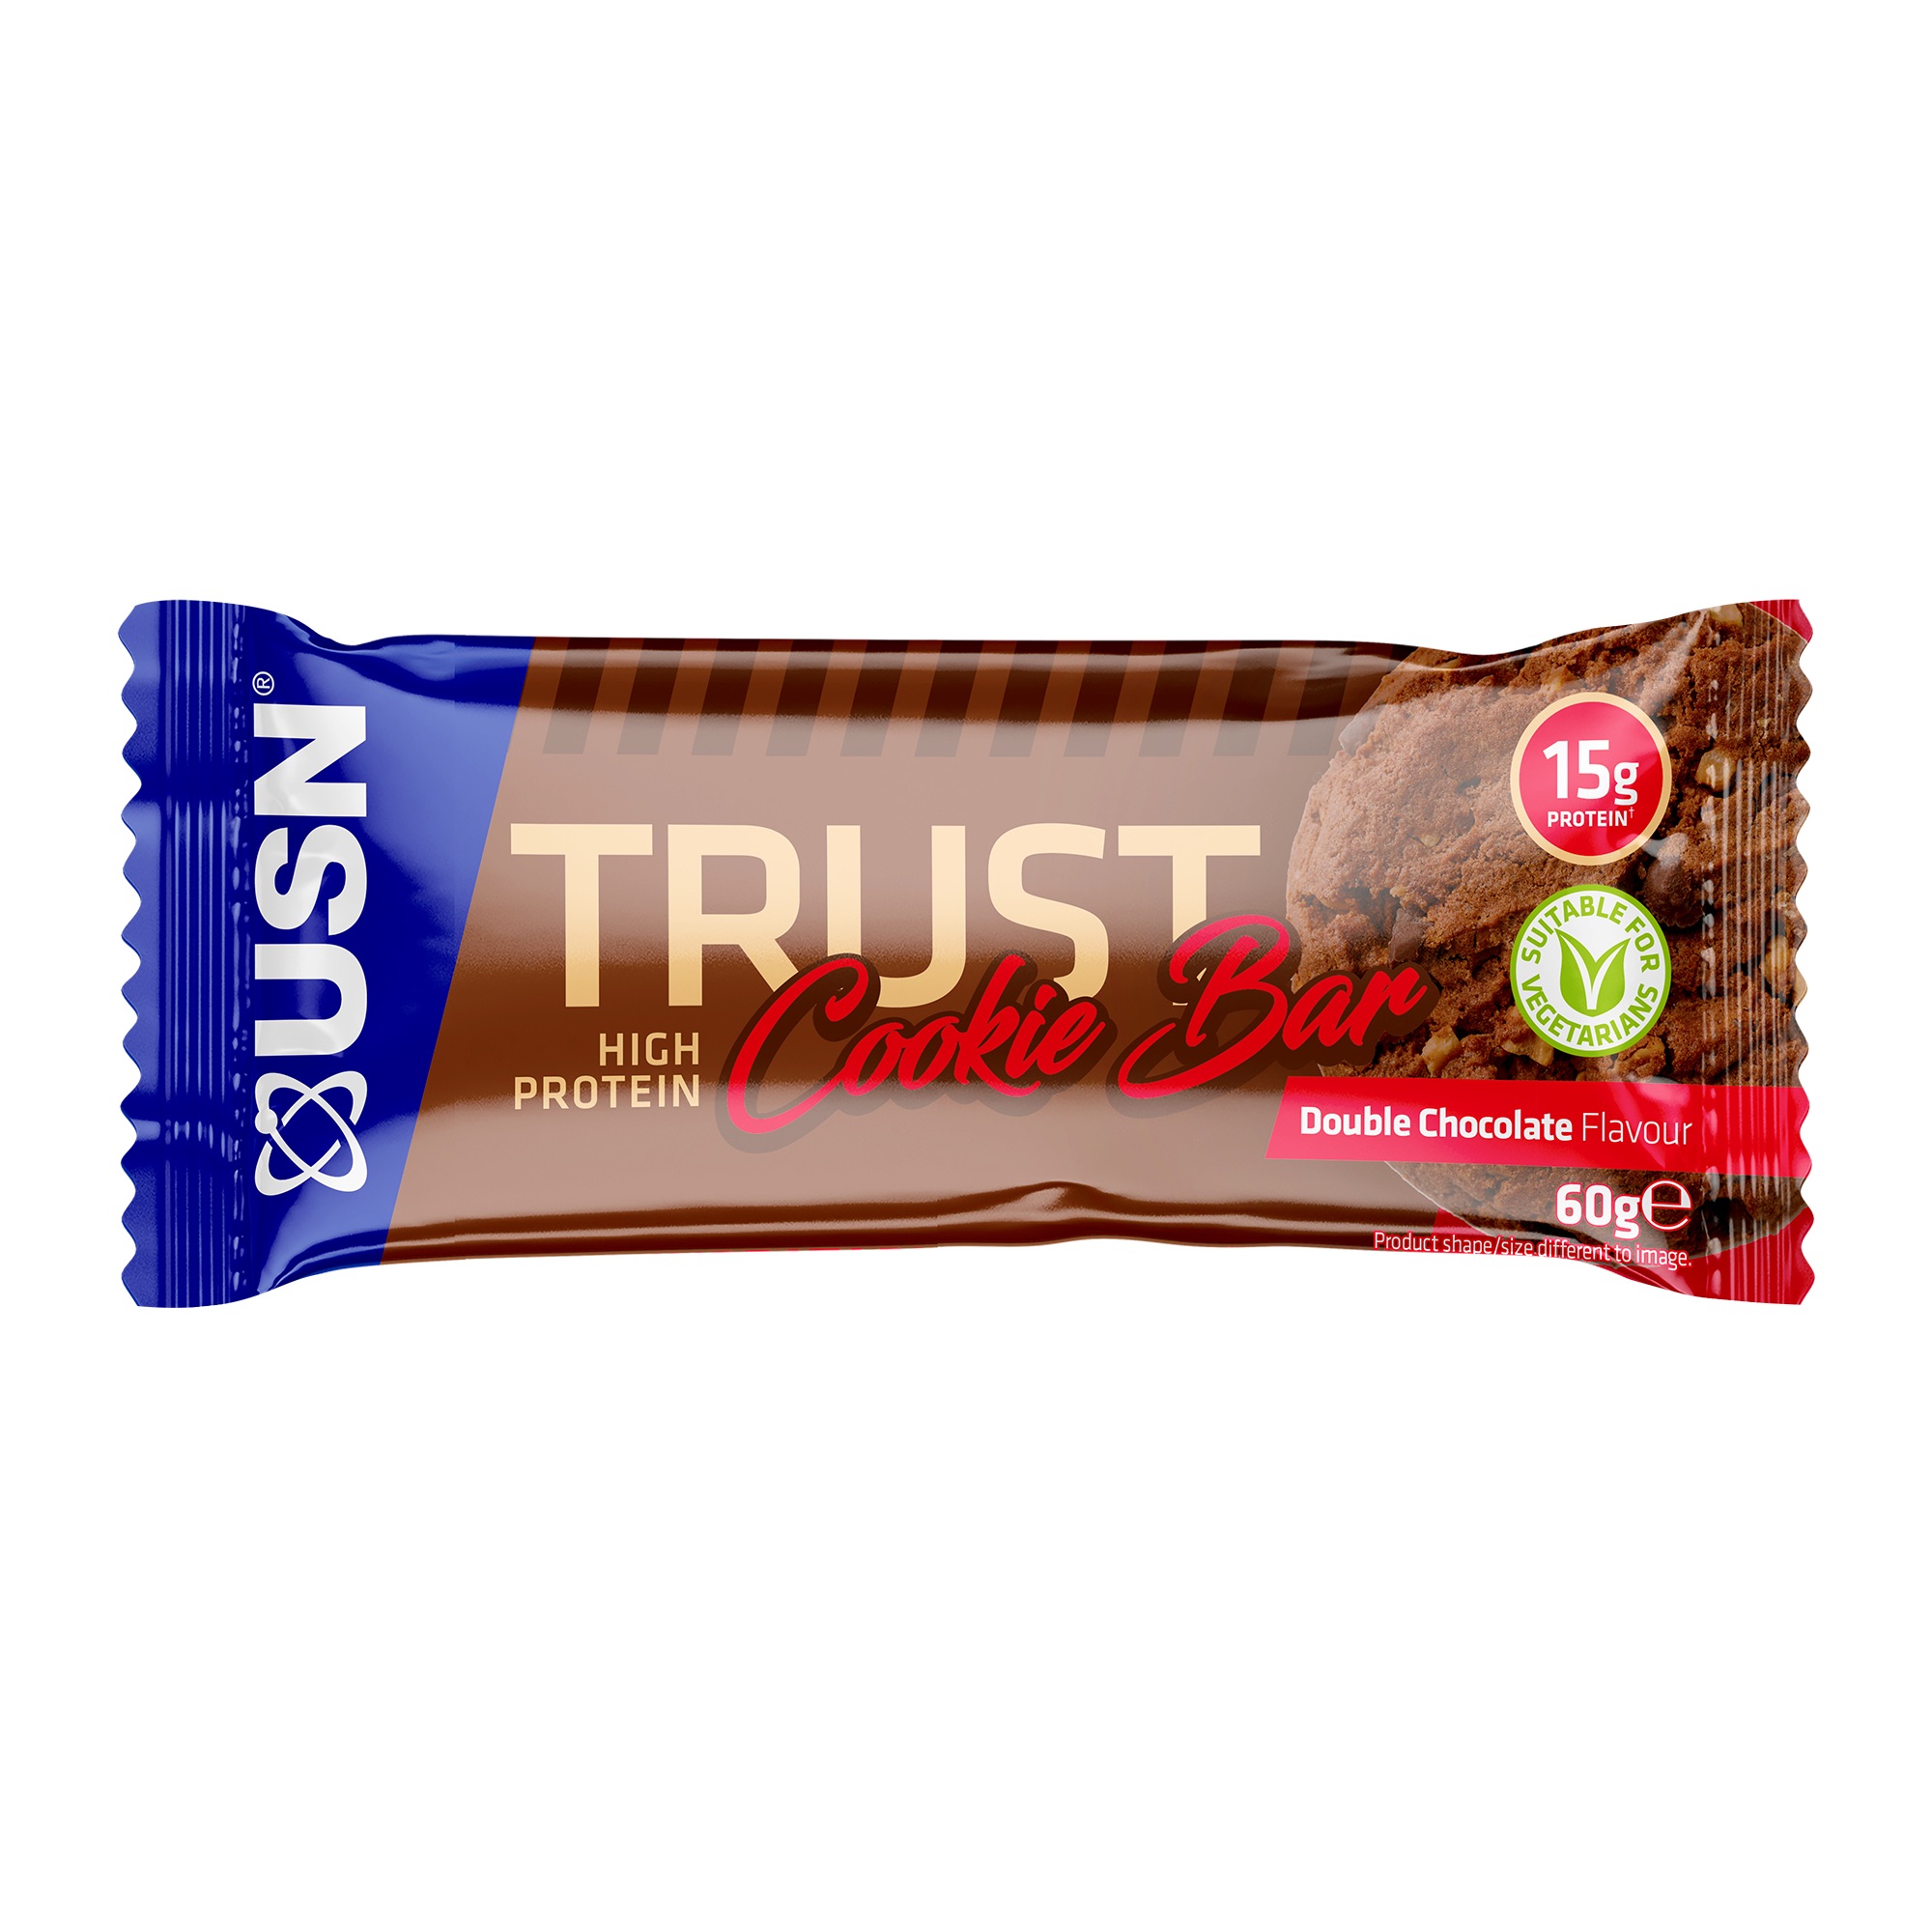 USN (Ultimate Sports Nutrition) USN Trust Cookie Bar - dvojitá čokoláda 60g